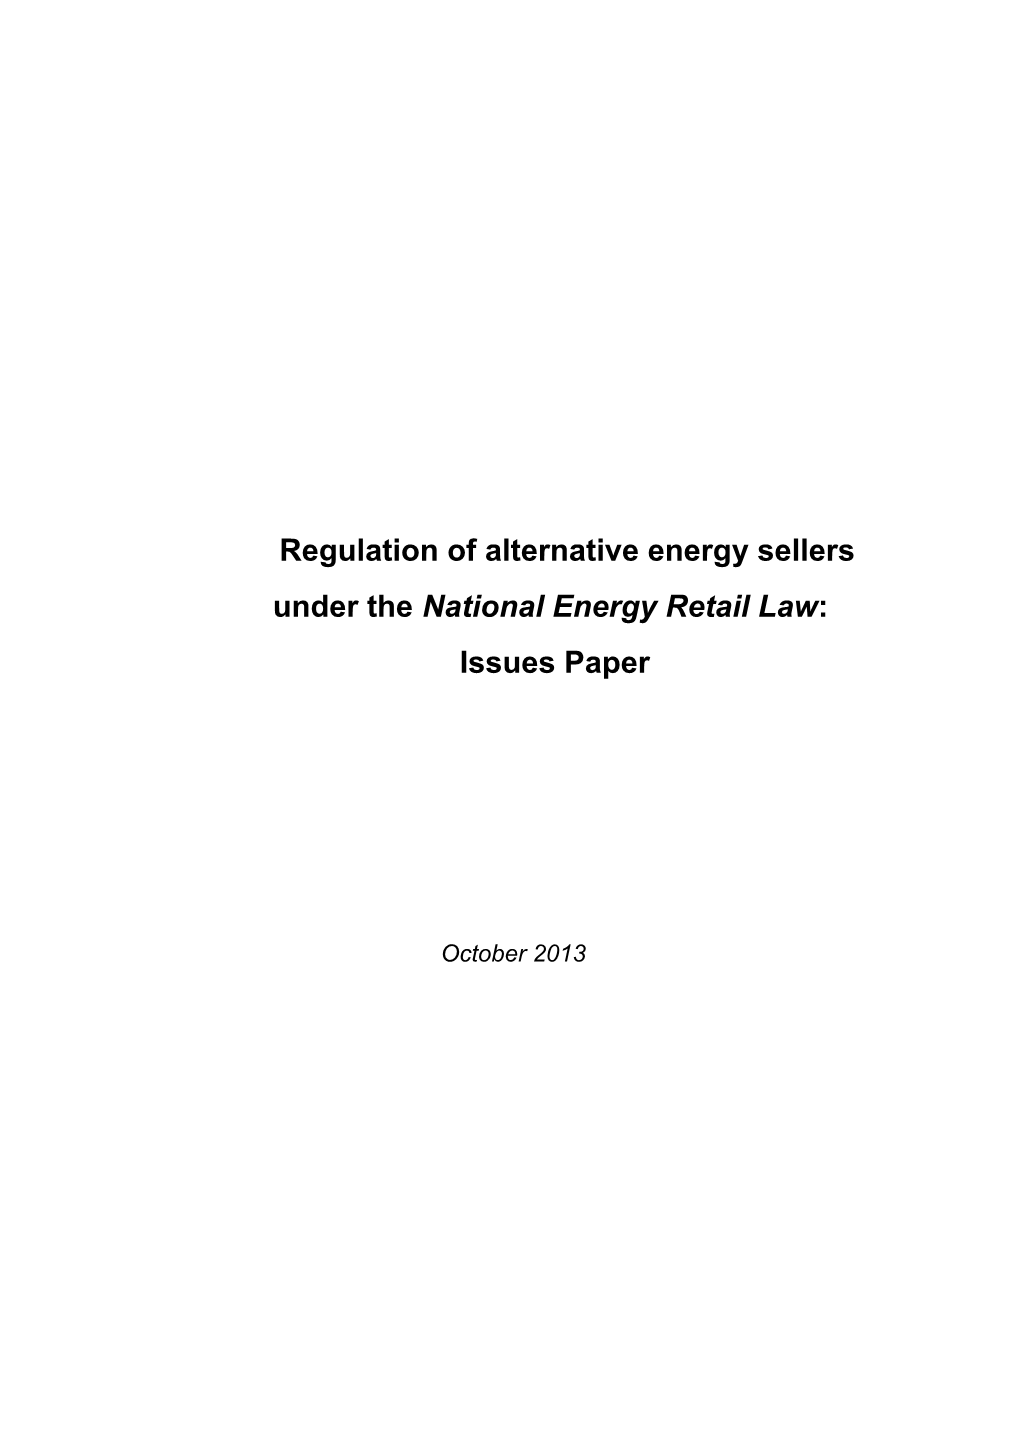 Regulation of Alternative Energy Sellers